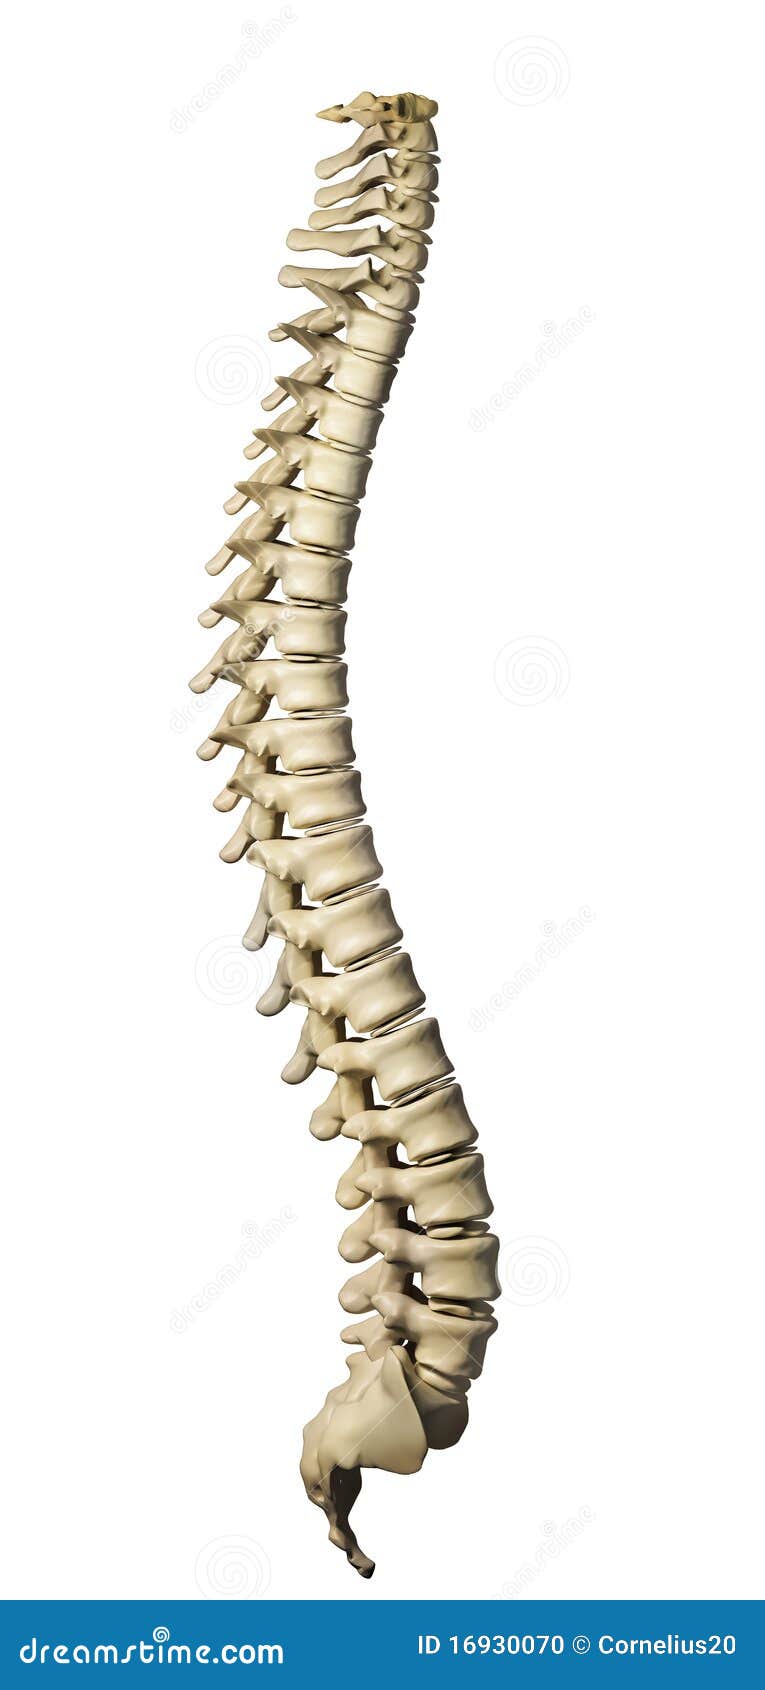 Human Spine Stock Photo - Image: 16930070